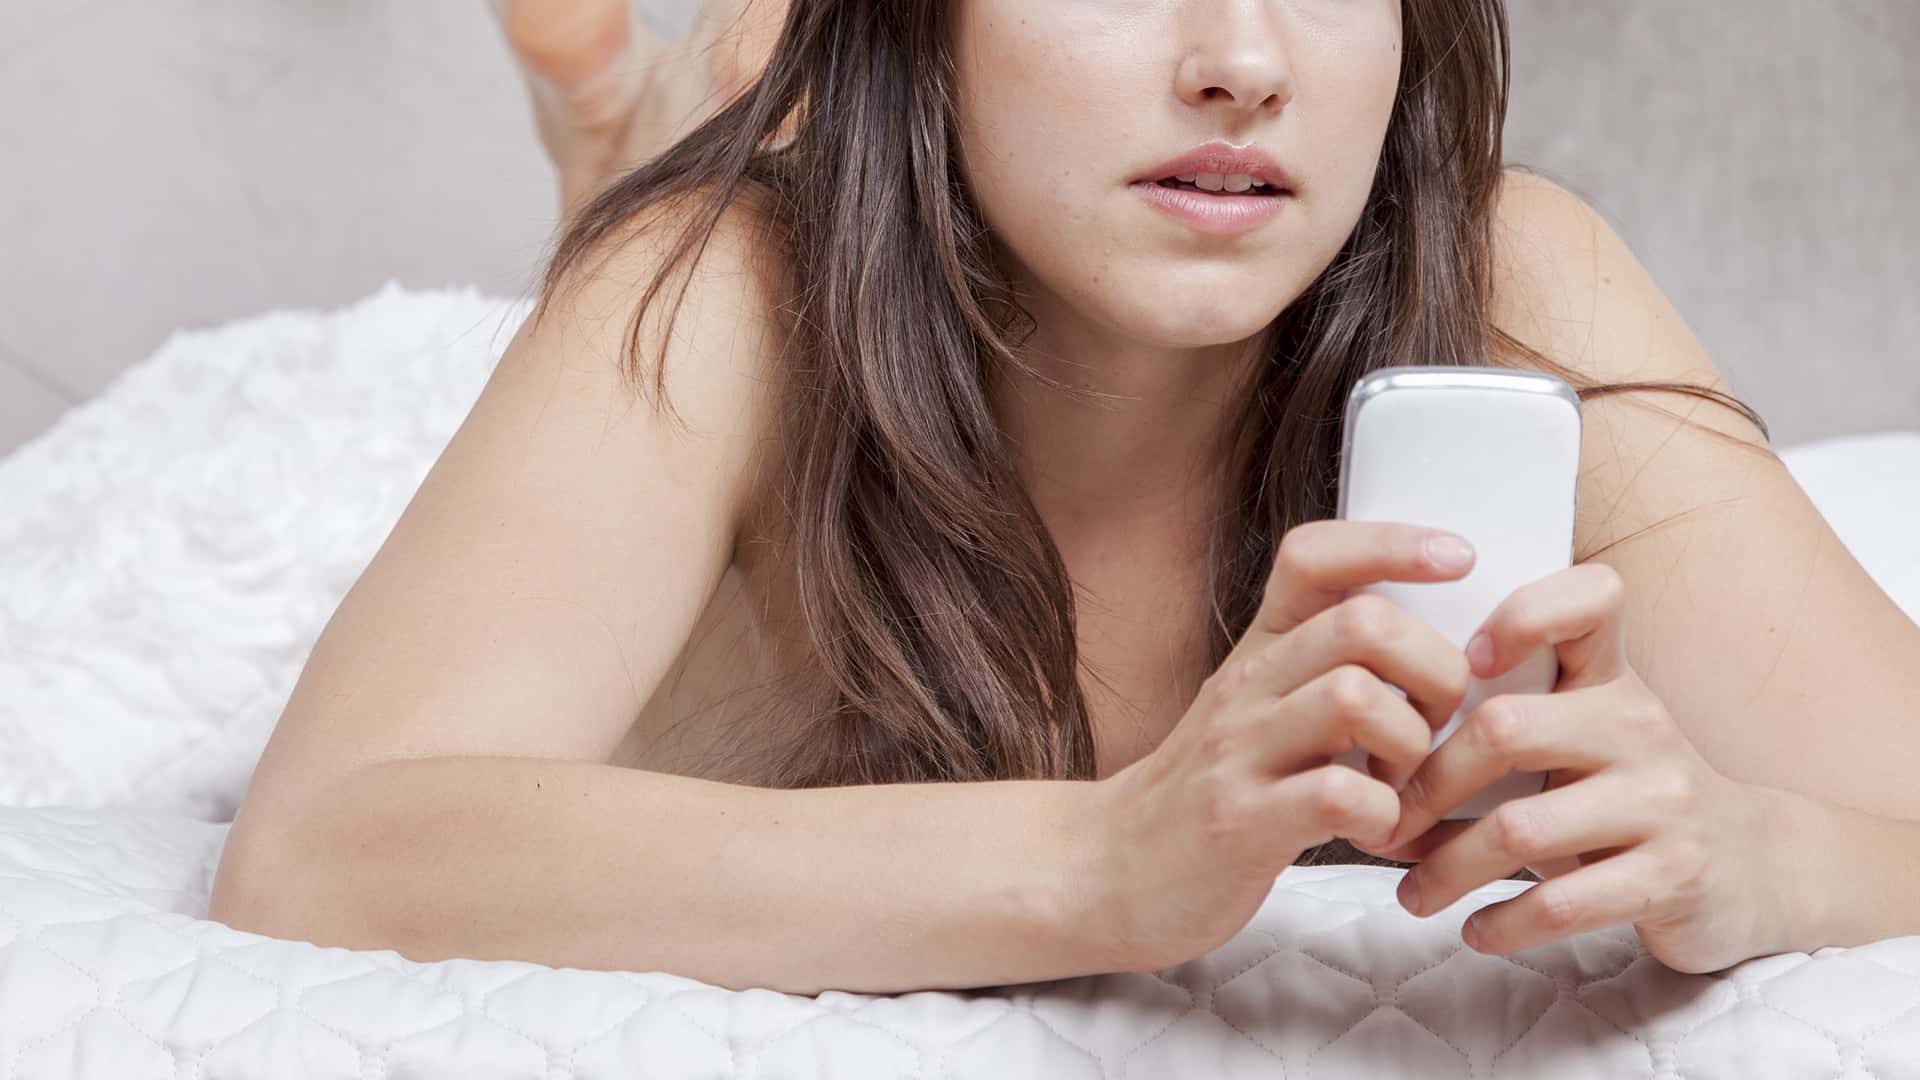 Sexting abuso sexual pornografia de menores netSegura